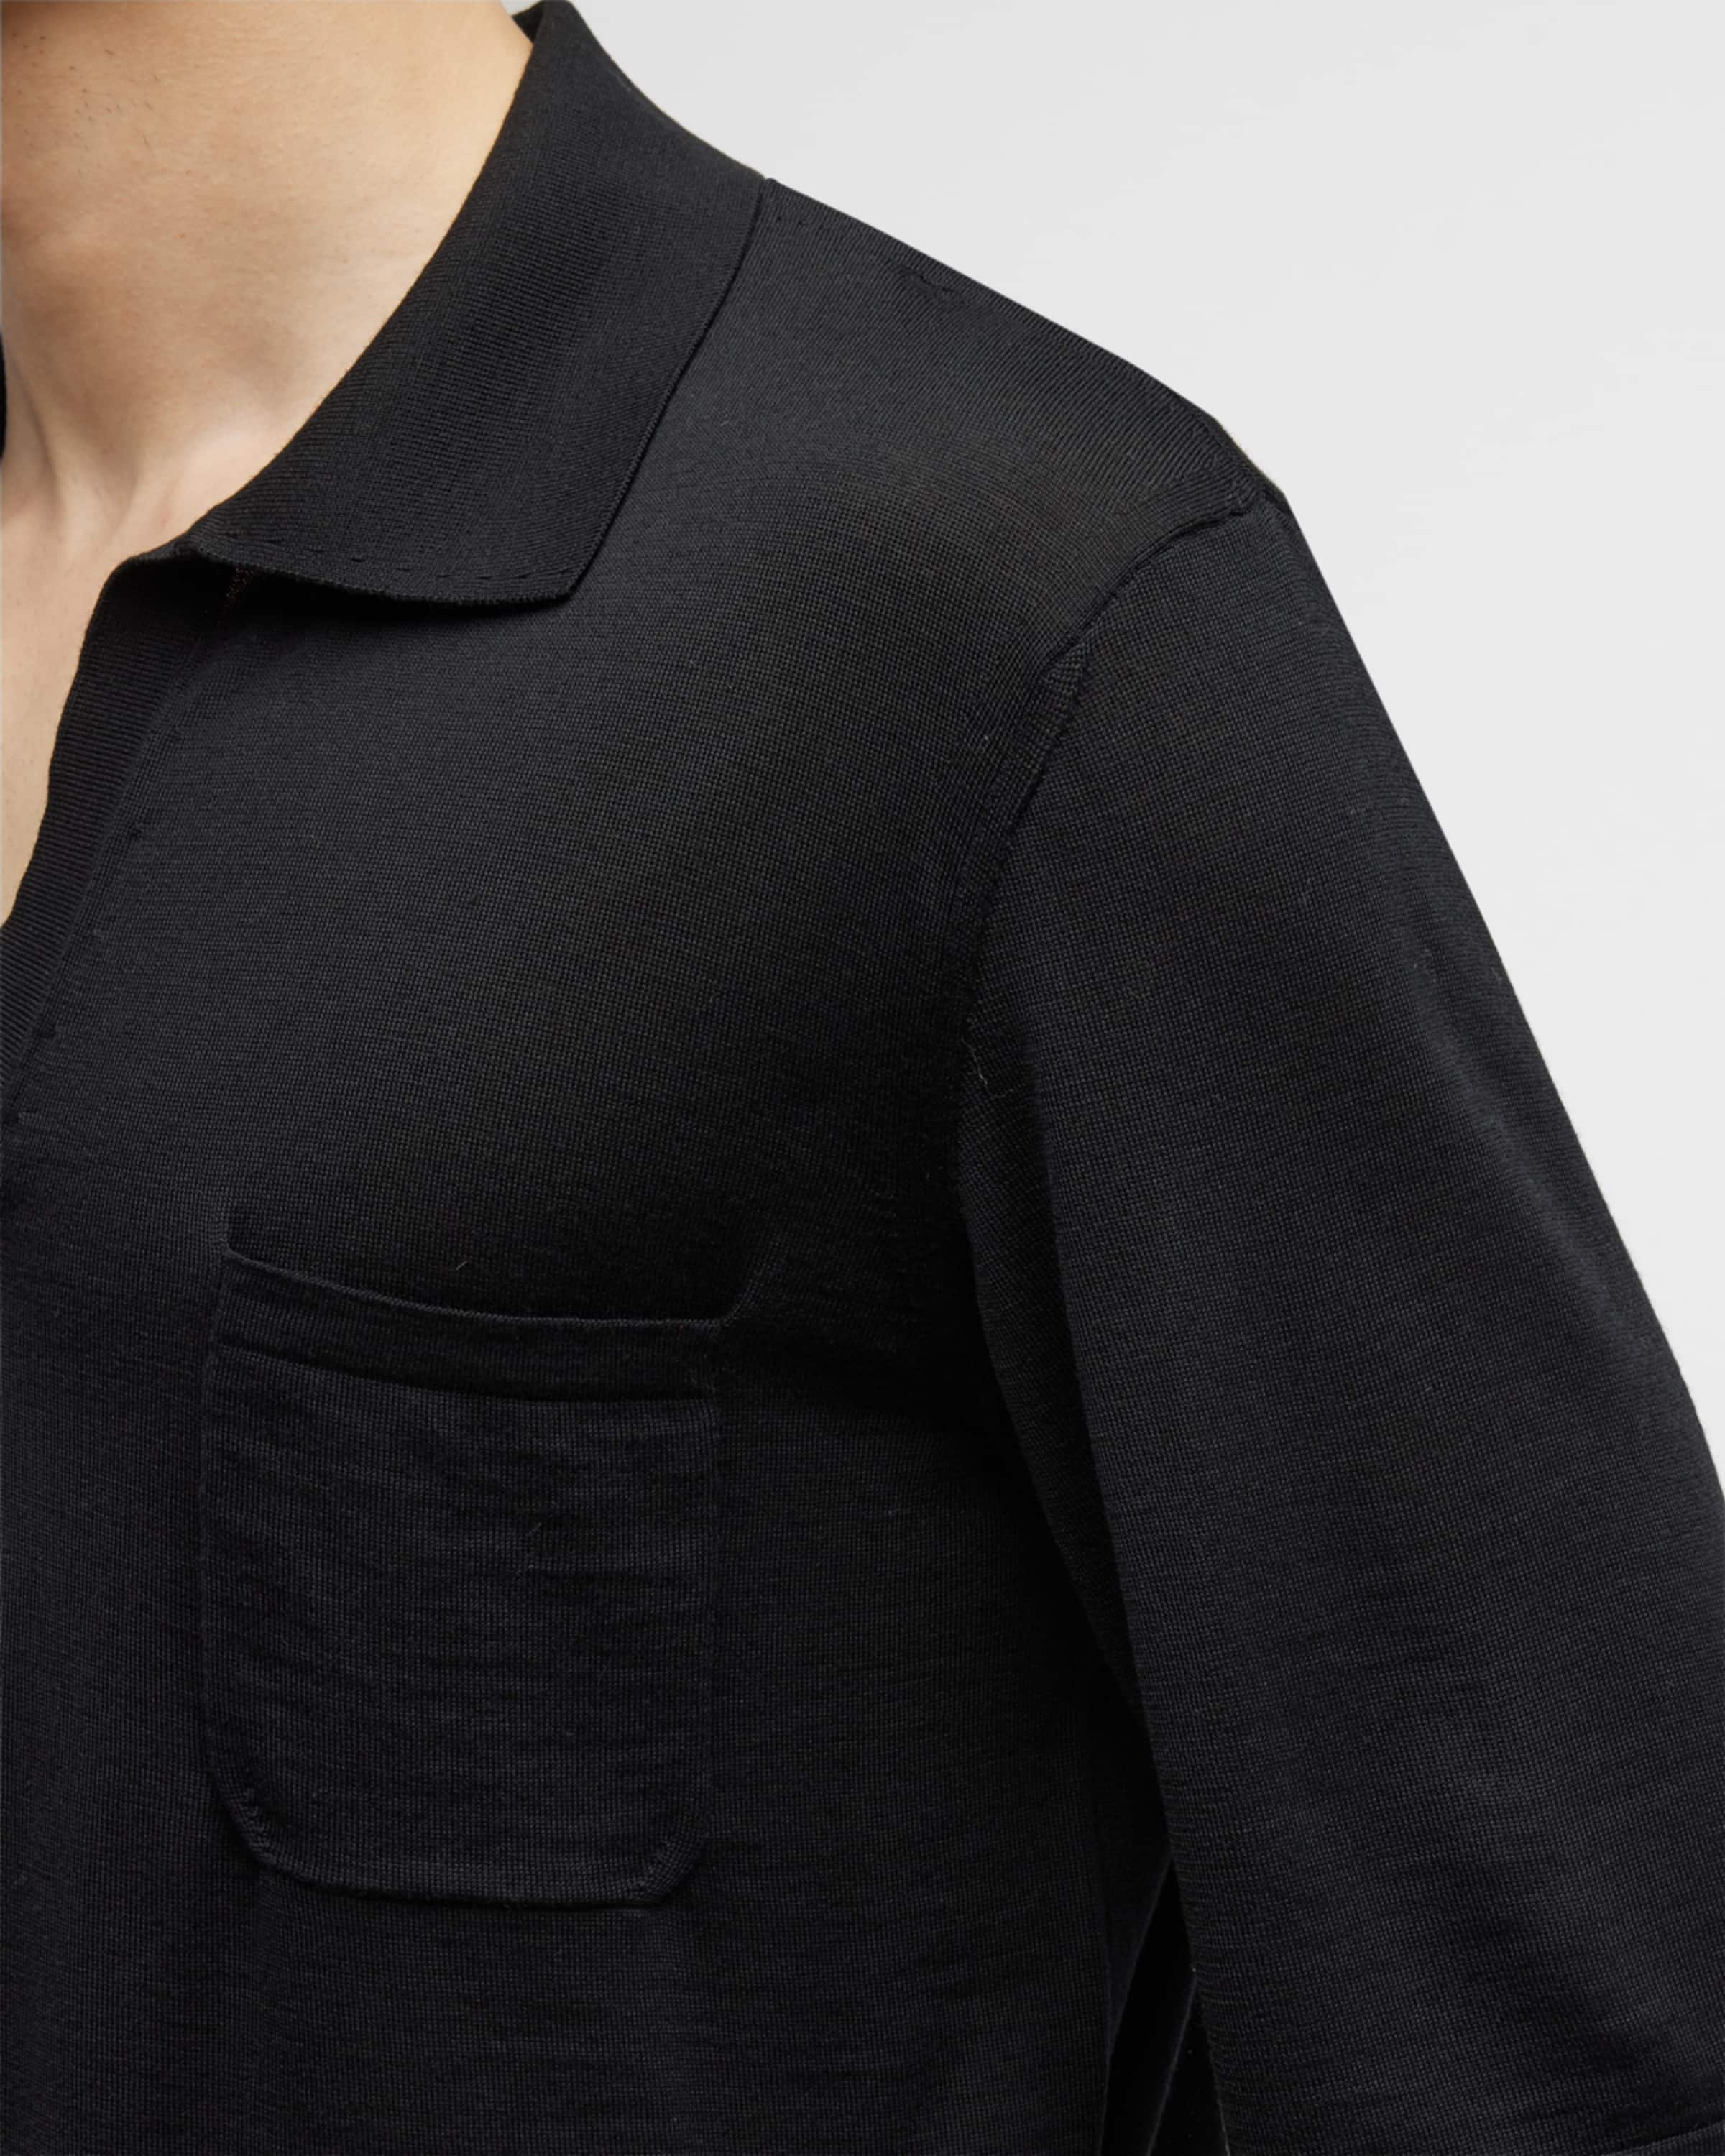 Men's Knit Polo Shirt with Open Collar - 5